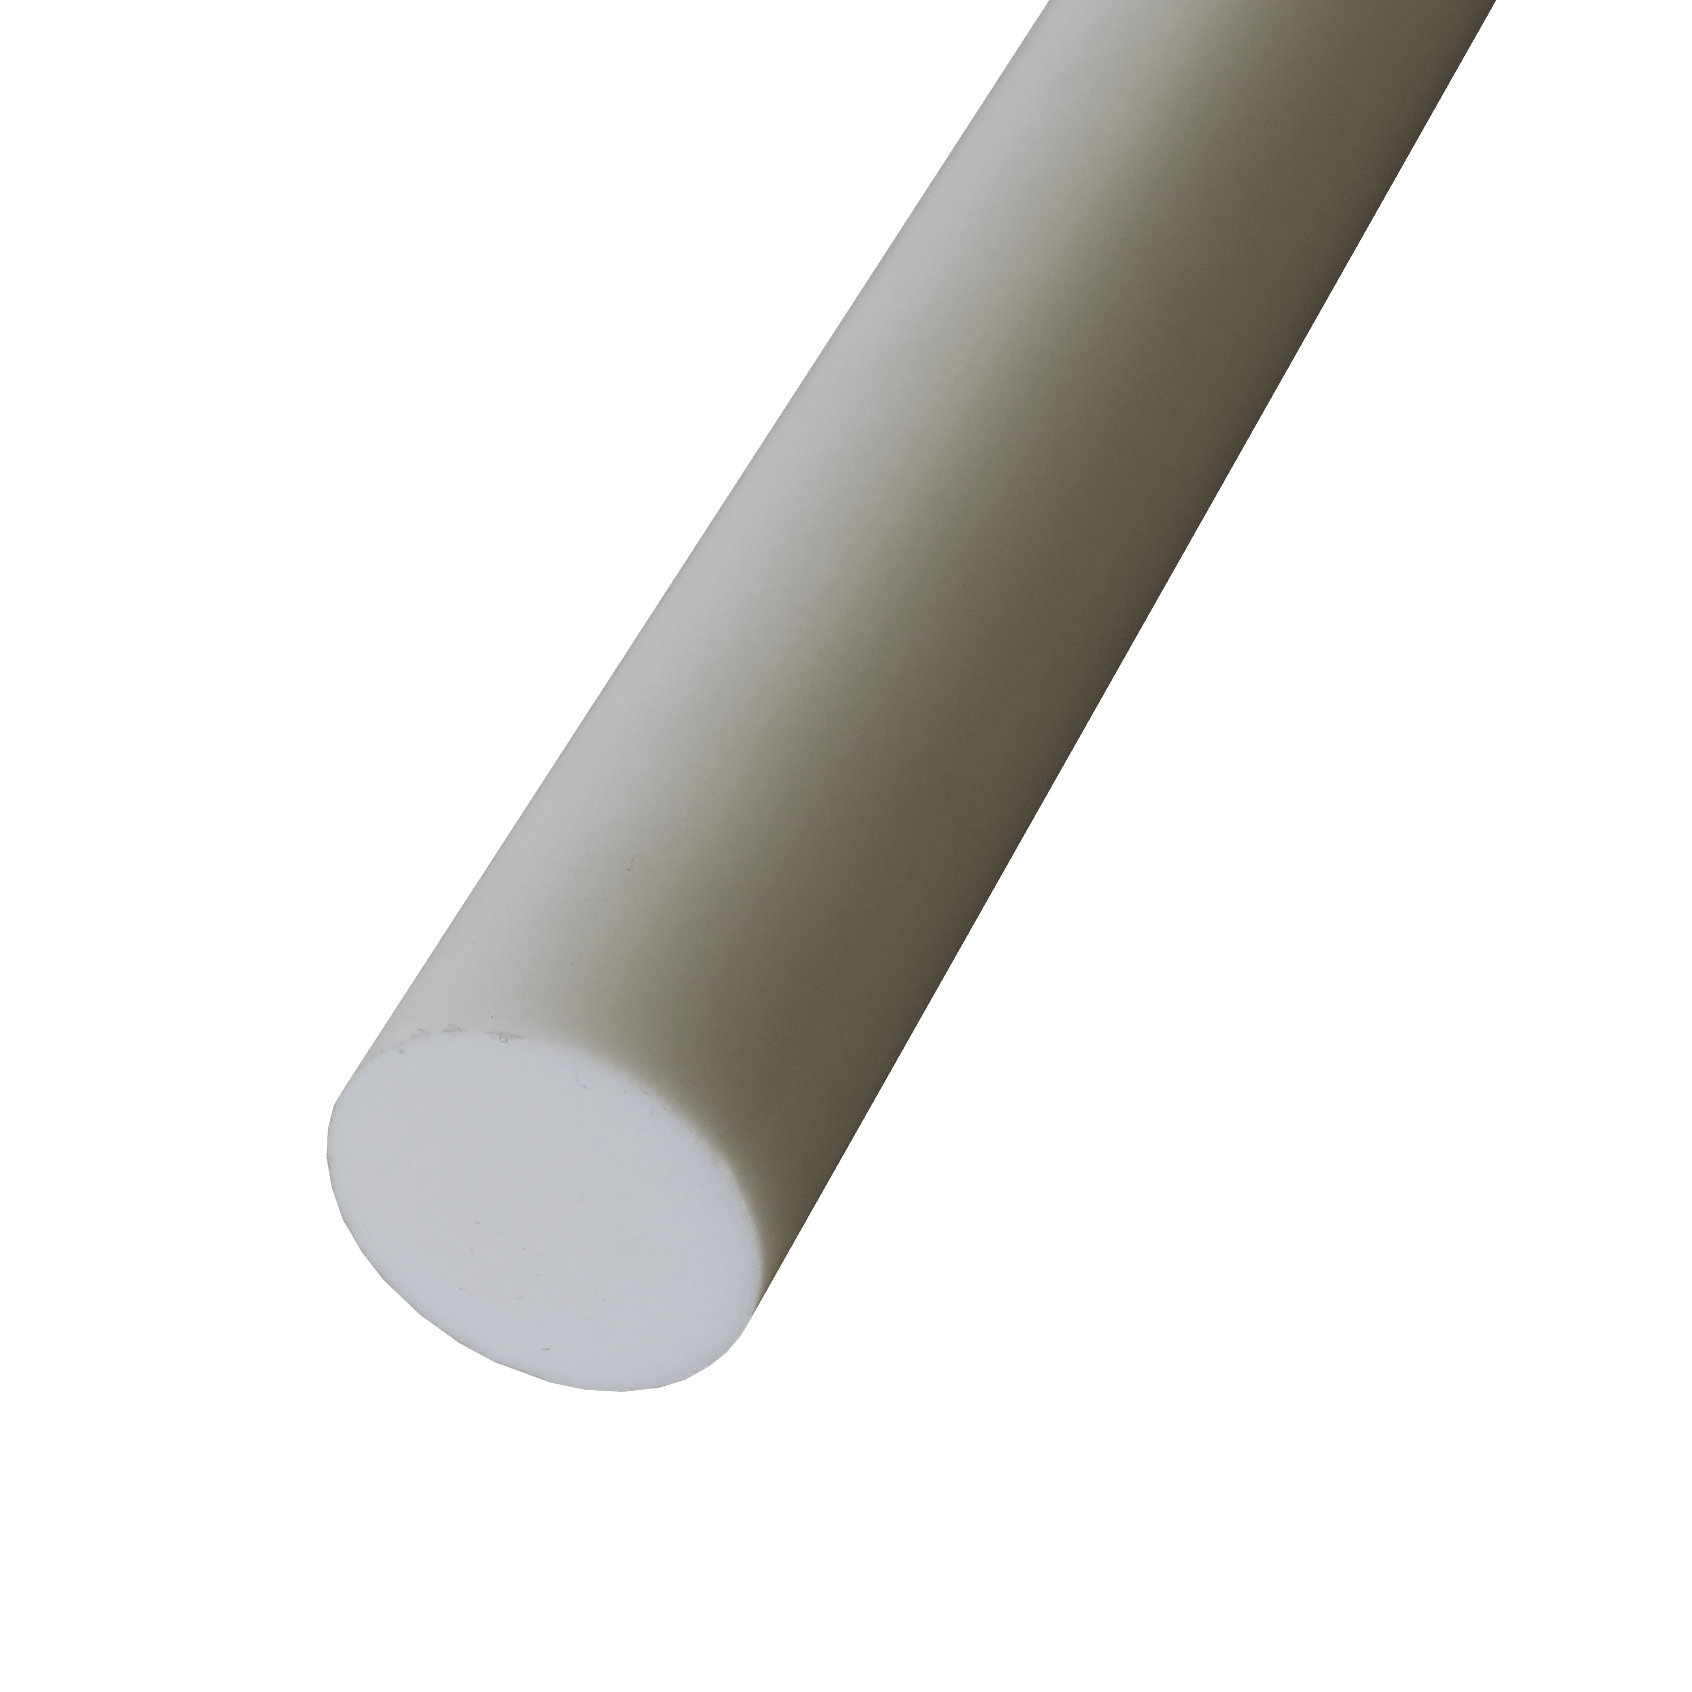 140mm Diameter X 1cm Long Teflon rod 